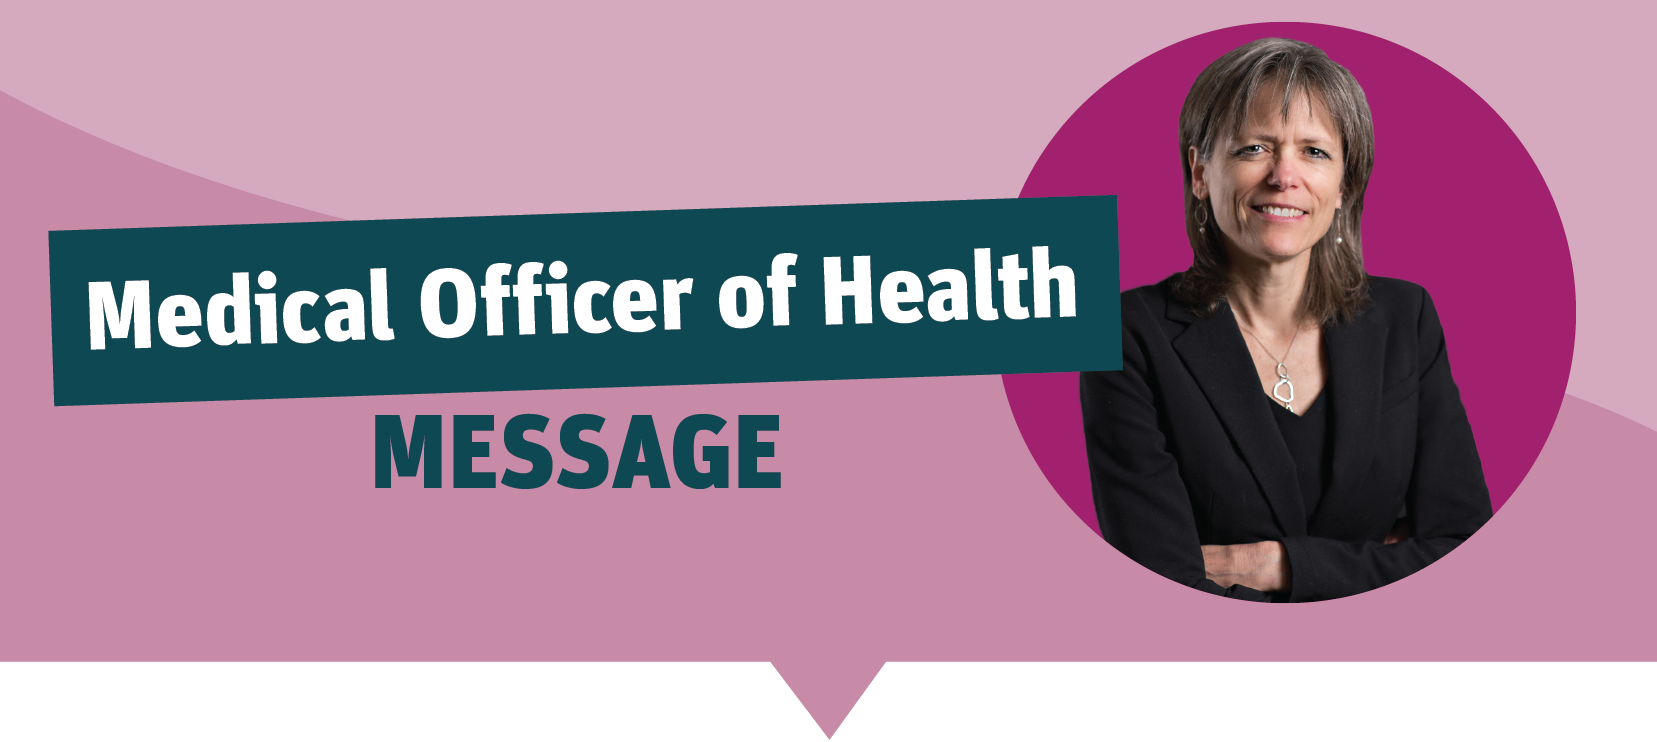 Medical Officer of Health Message